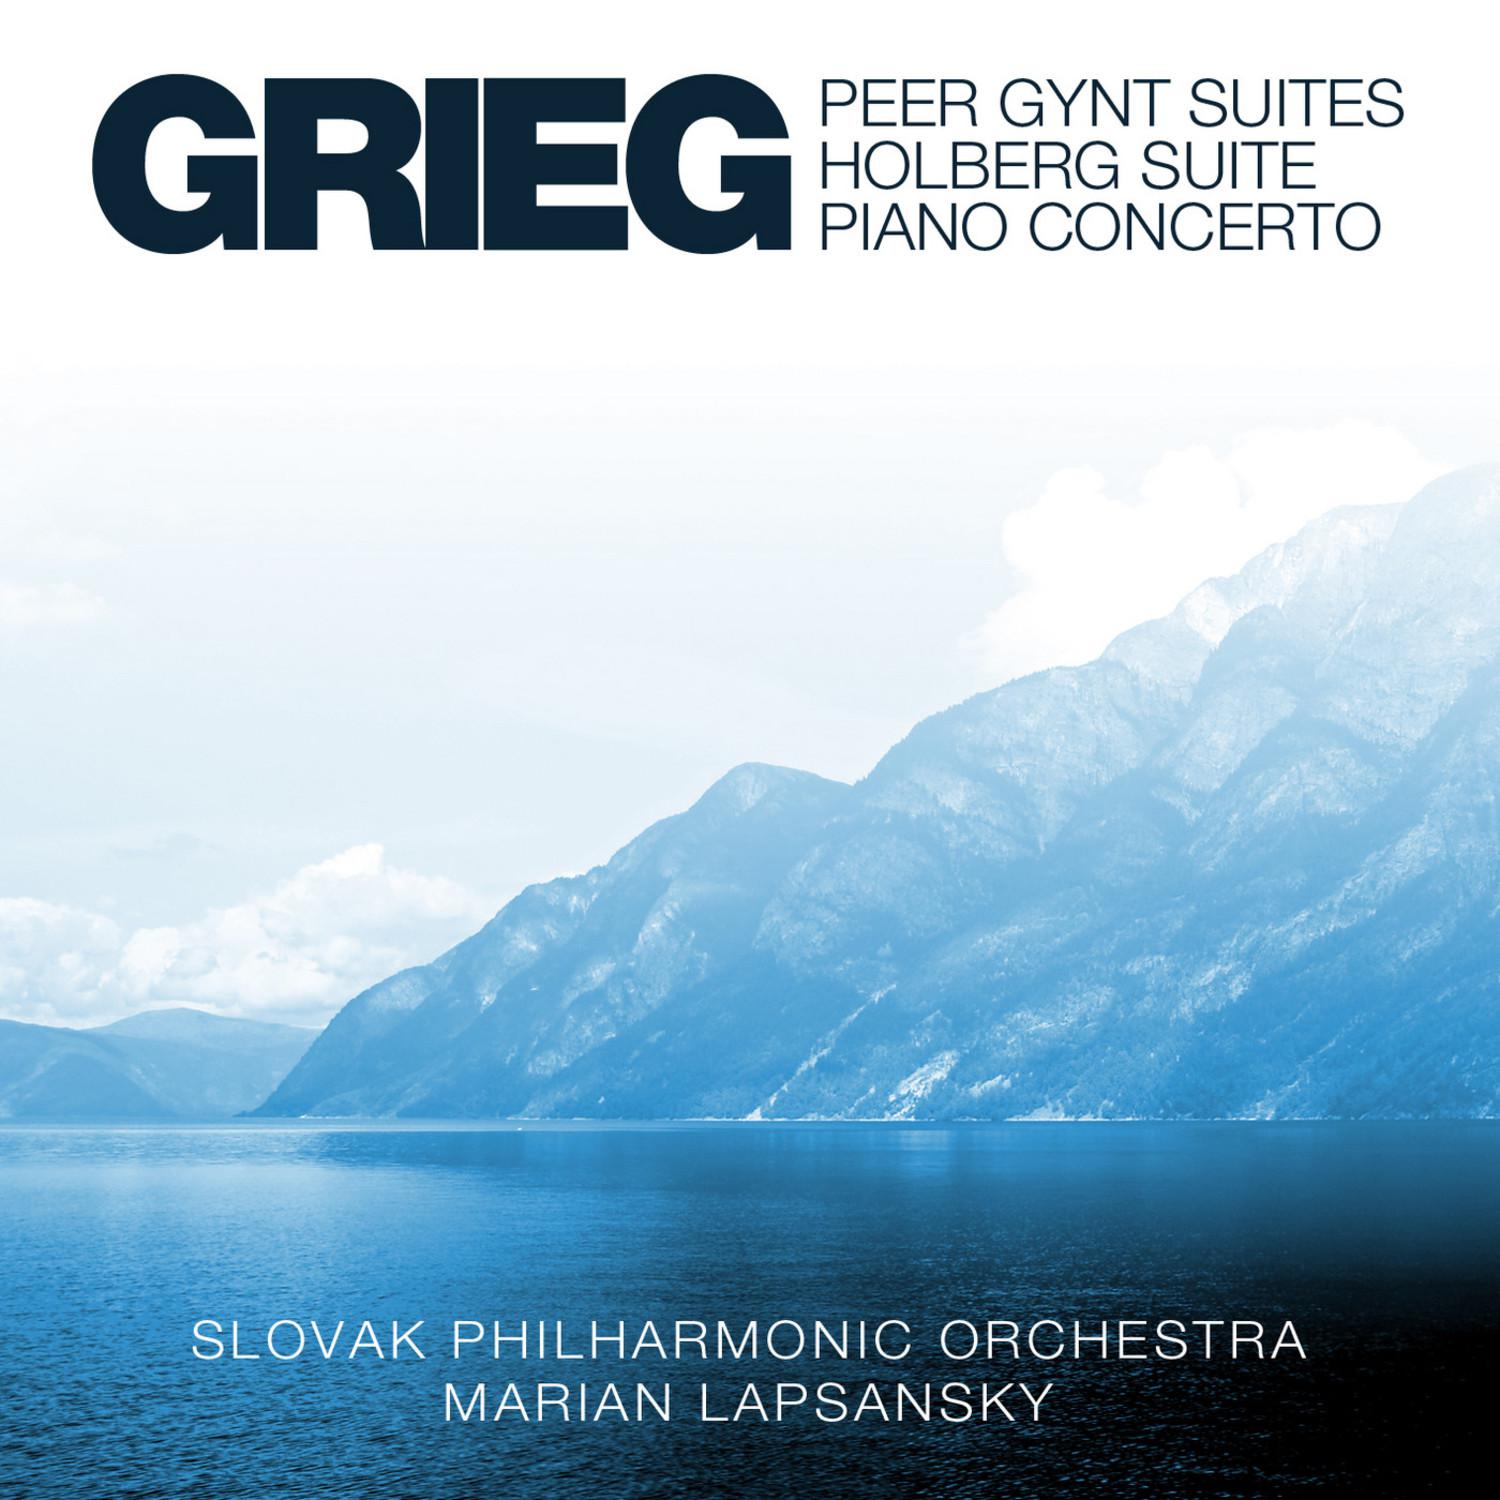 Peer Gynt Suite No. 2, Op. 55: III. Peer Gynt's Homecoming: Allegro agitato